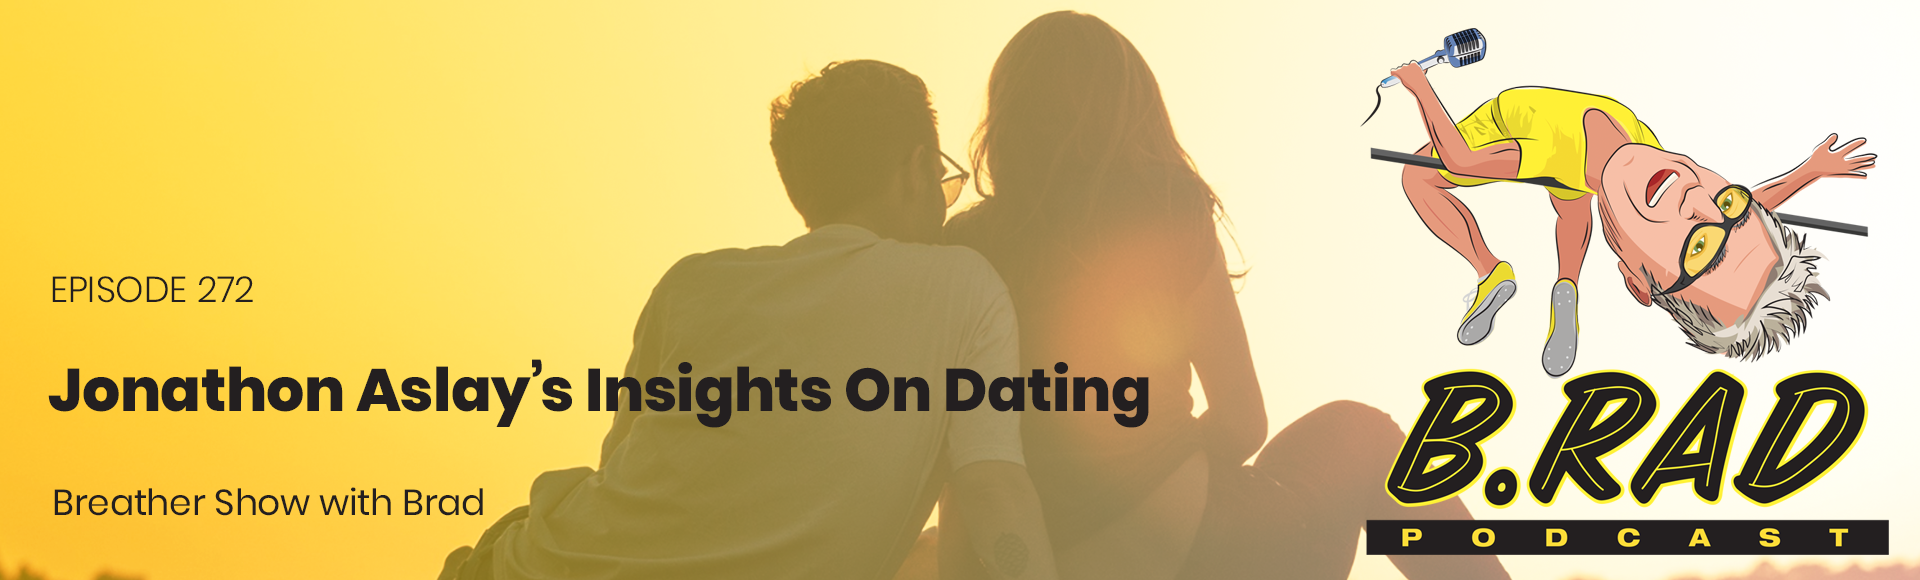 Jonathon Aslay S Insights On Dating B Rad Podcast With Brad Kearns